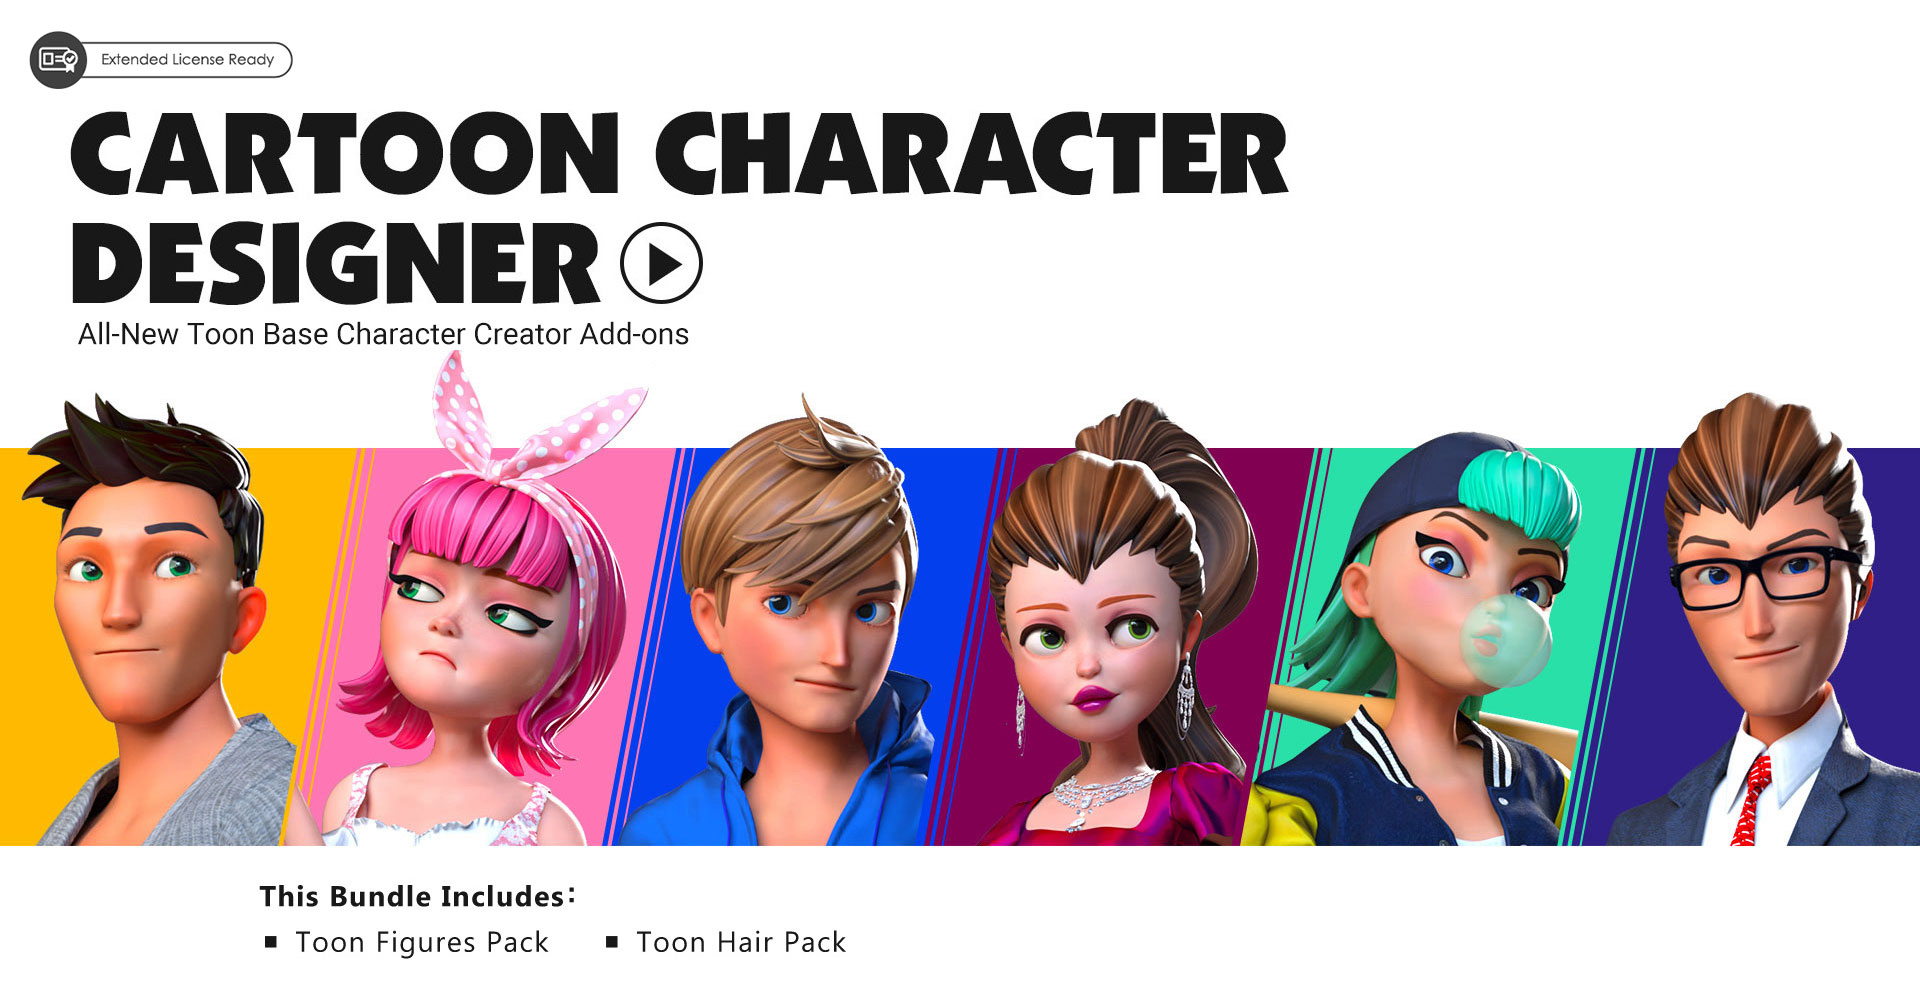 Character Creator Content Pack - Cartoon Character Designer